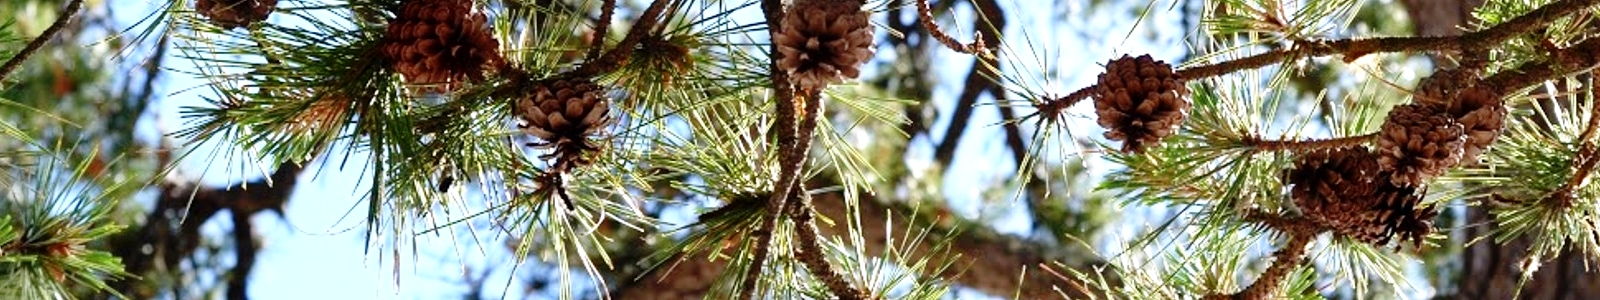 pine_conesdarker